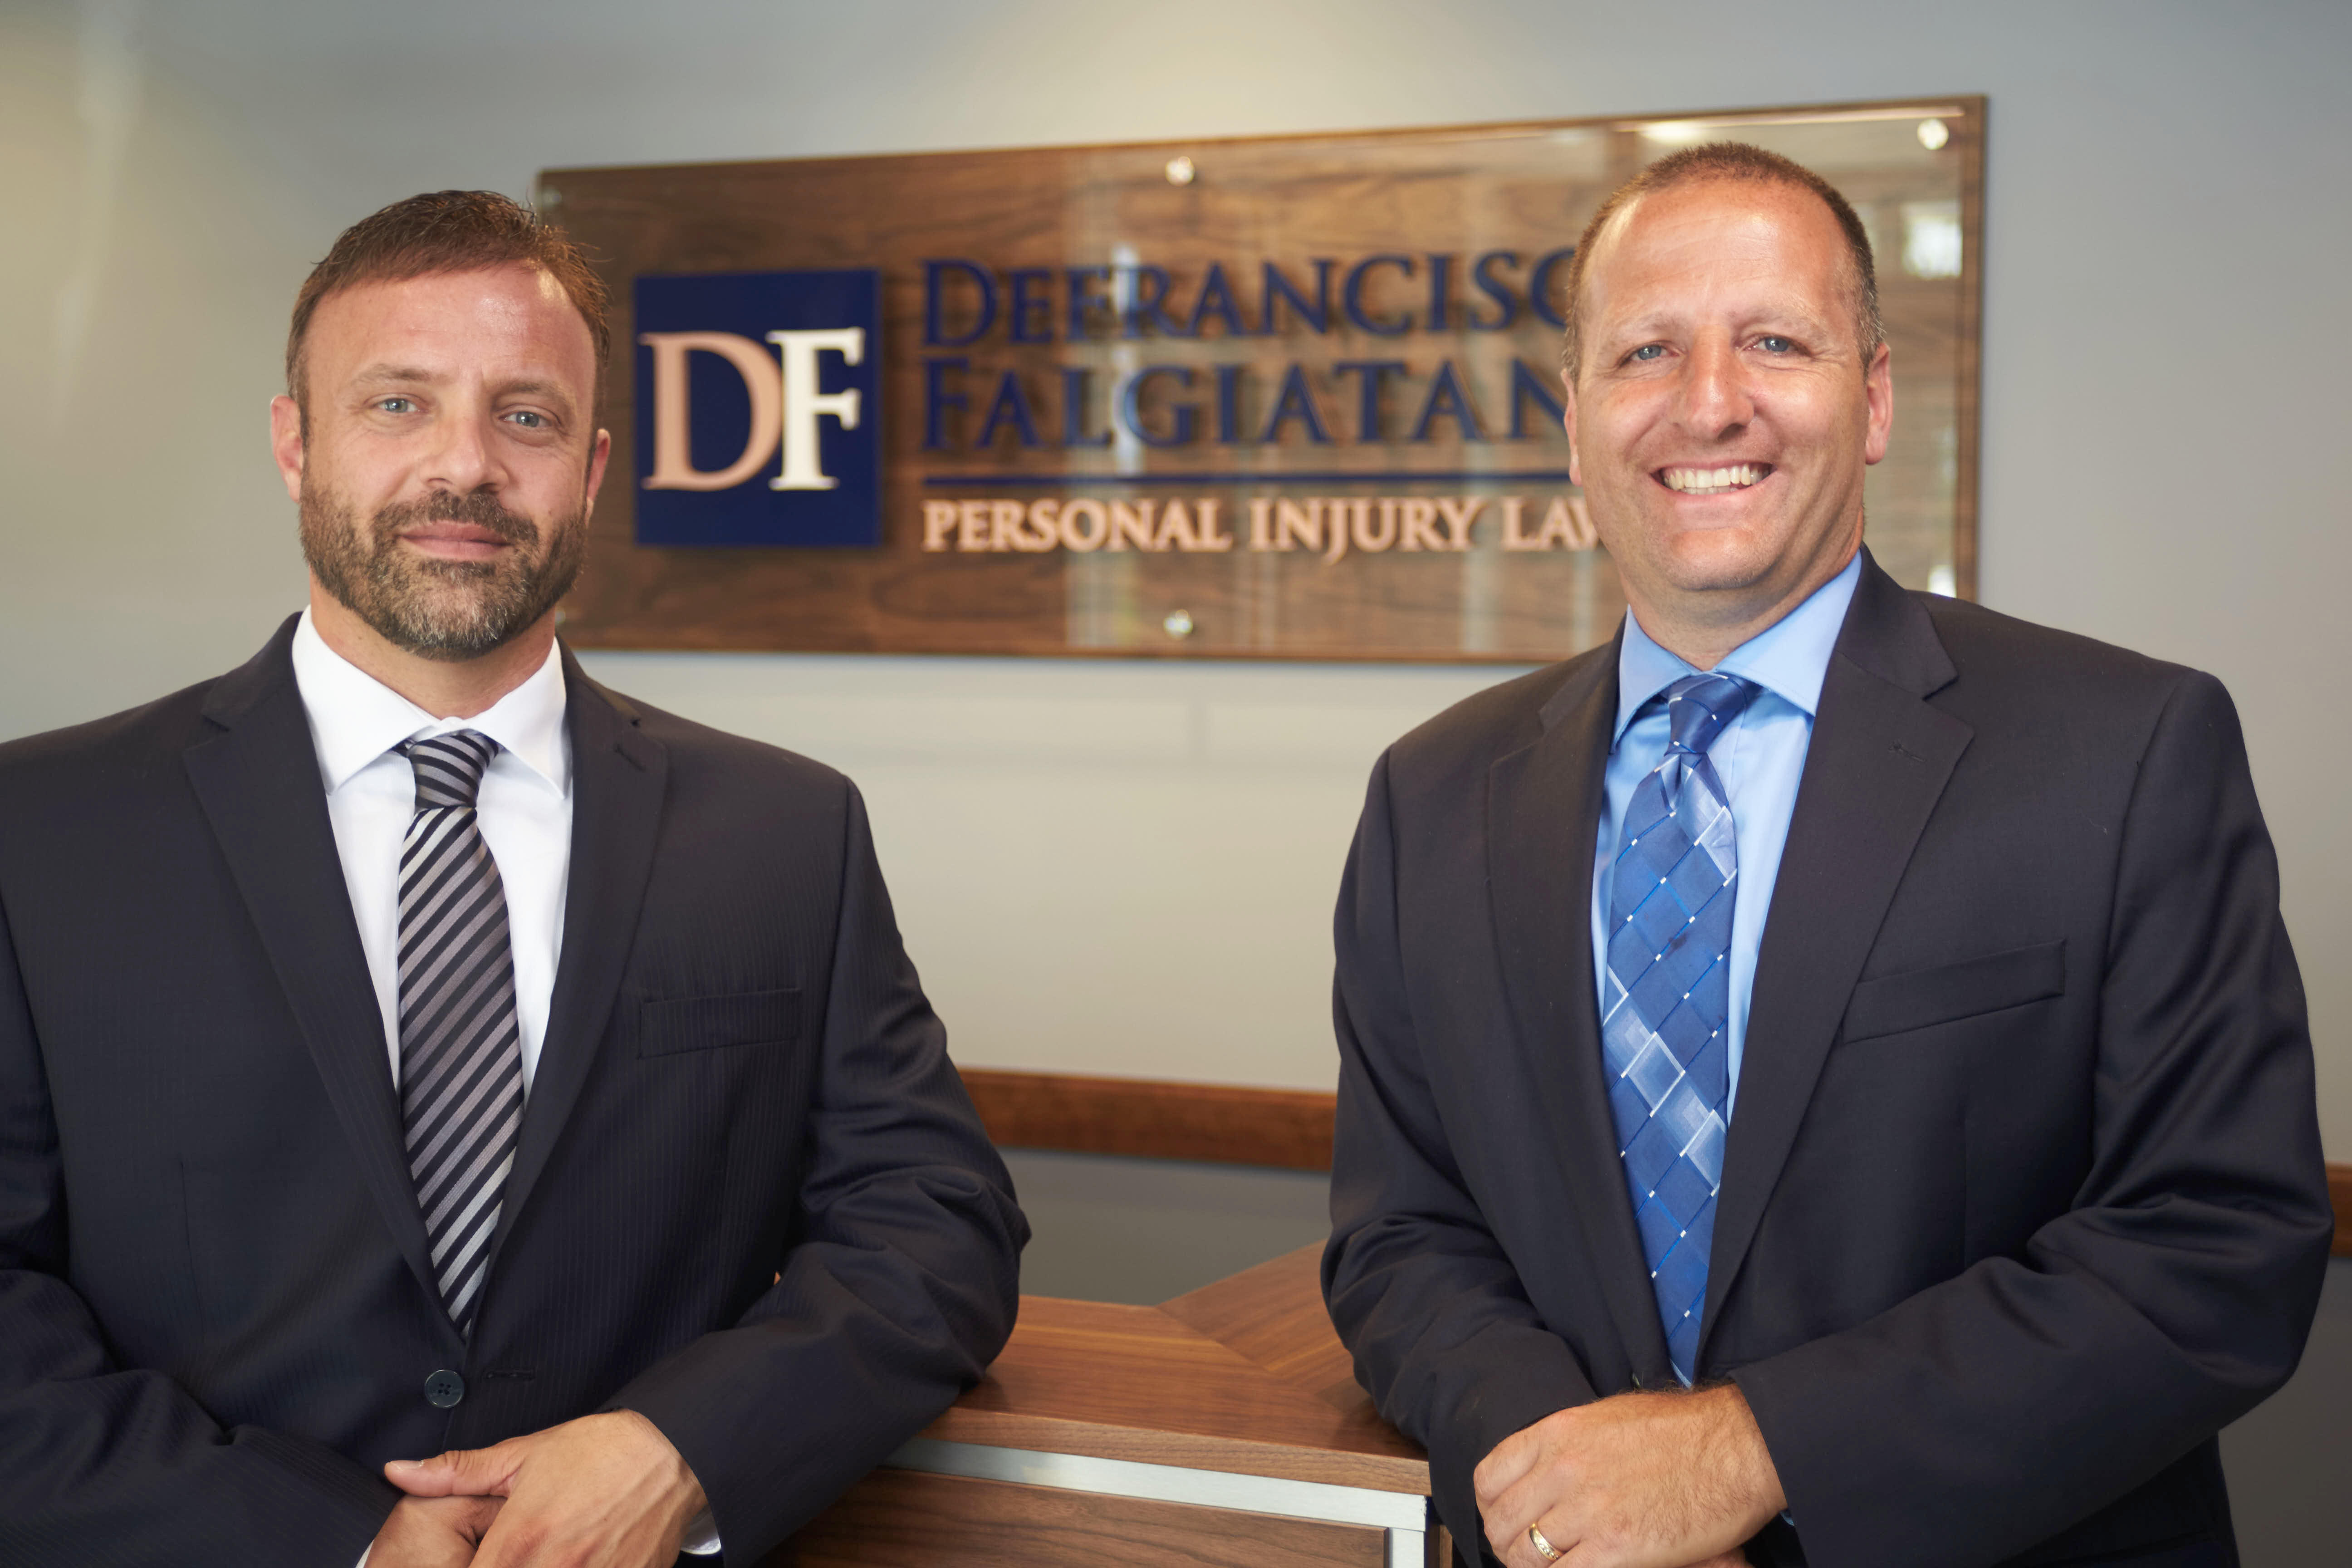 DeFrancisco & Falgiatano Personal Injury Lawyers Photo